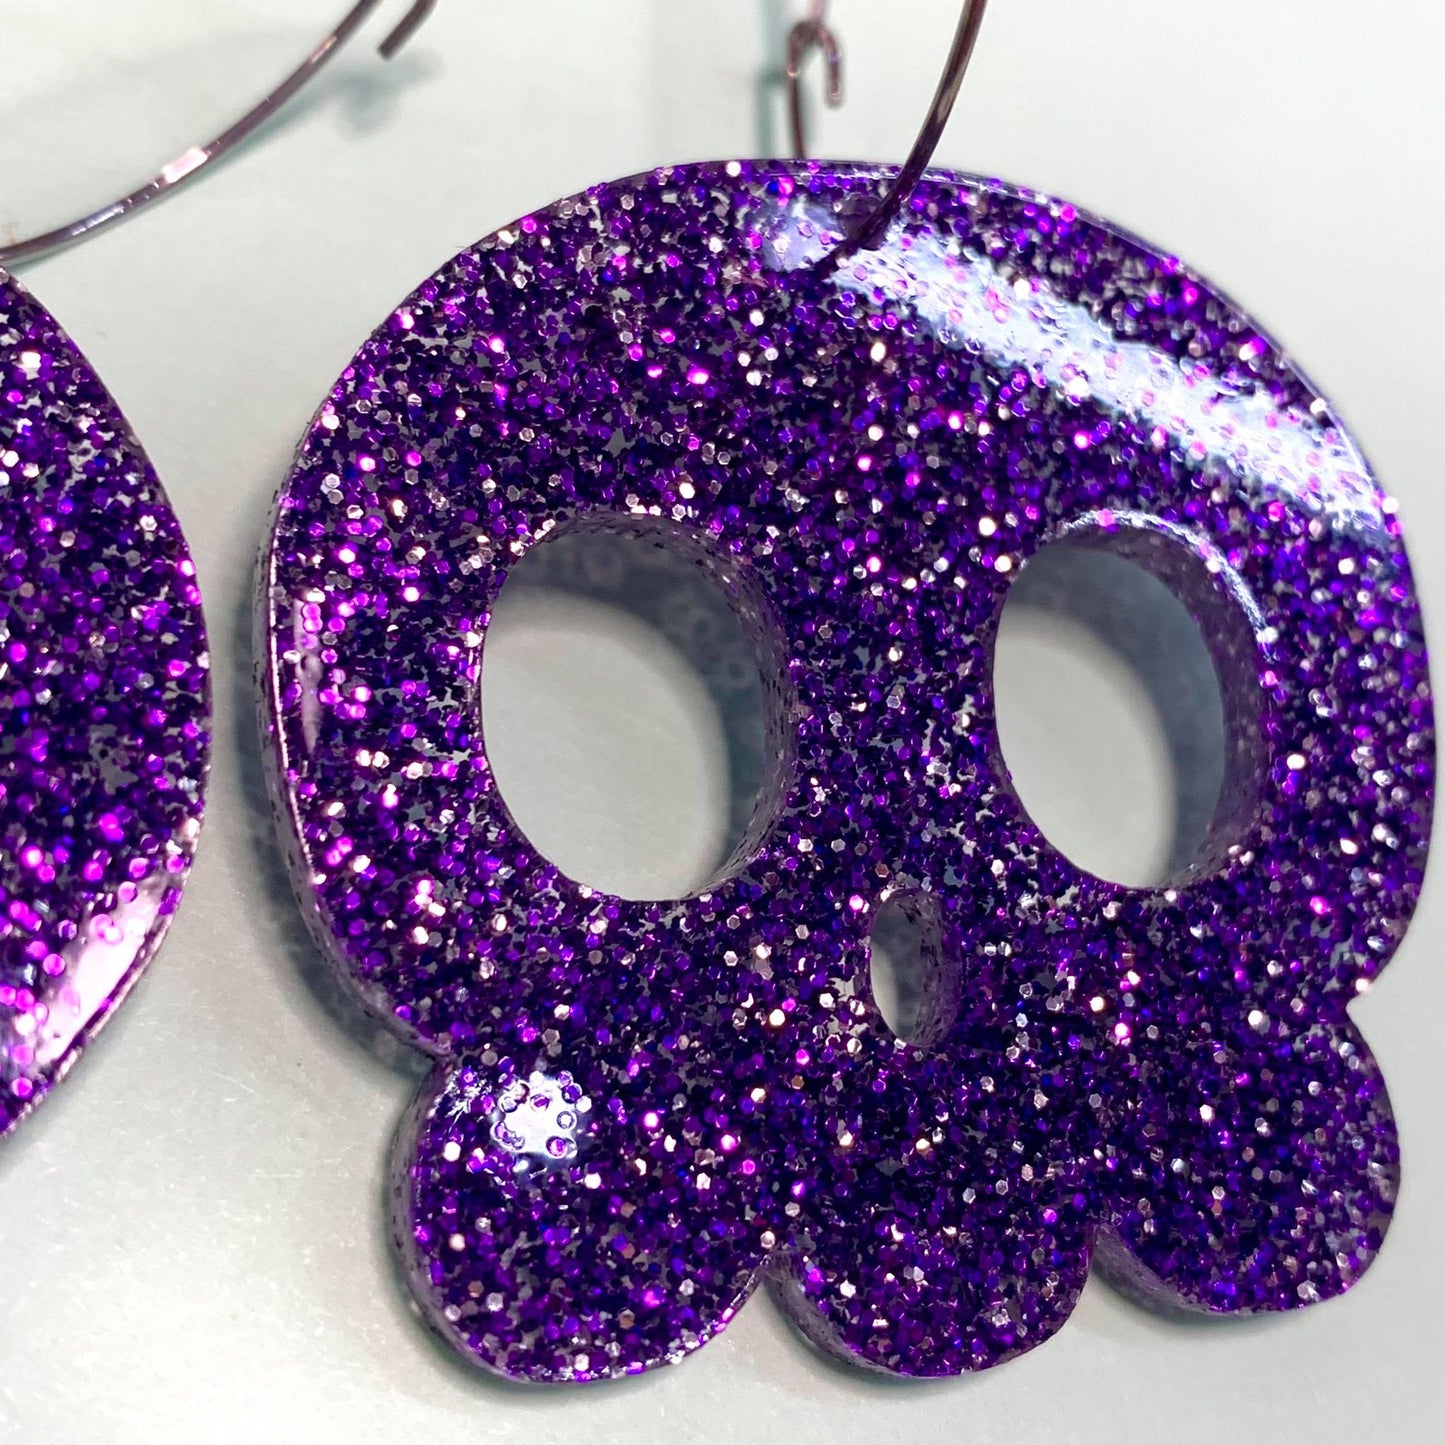 MAKIN' WHOOPEE - "Death's Head" Galactic Purple Glitter Hoop Halloween Earrings